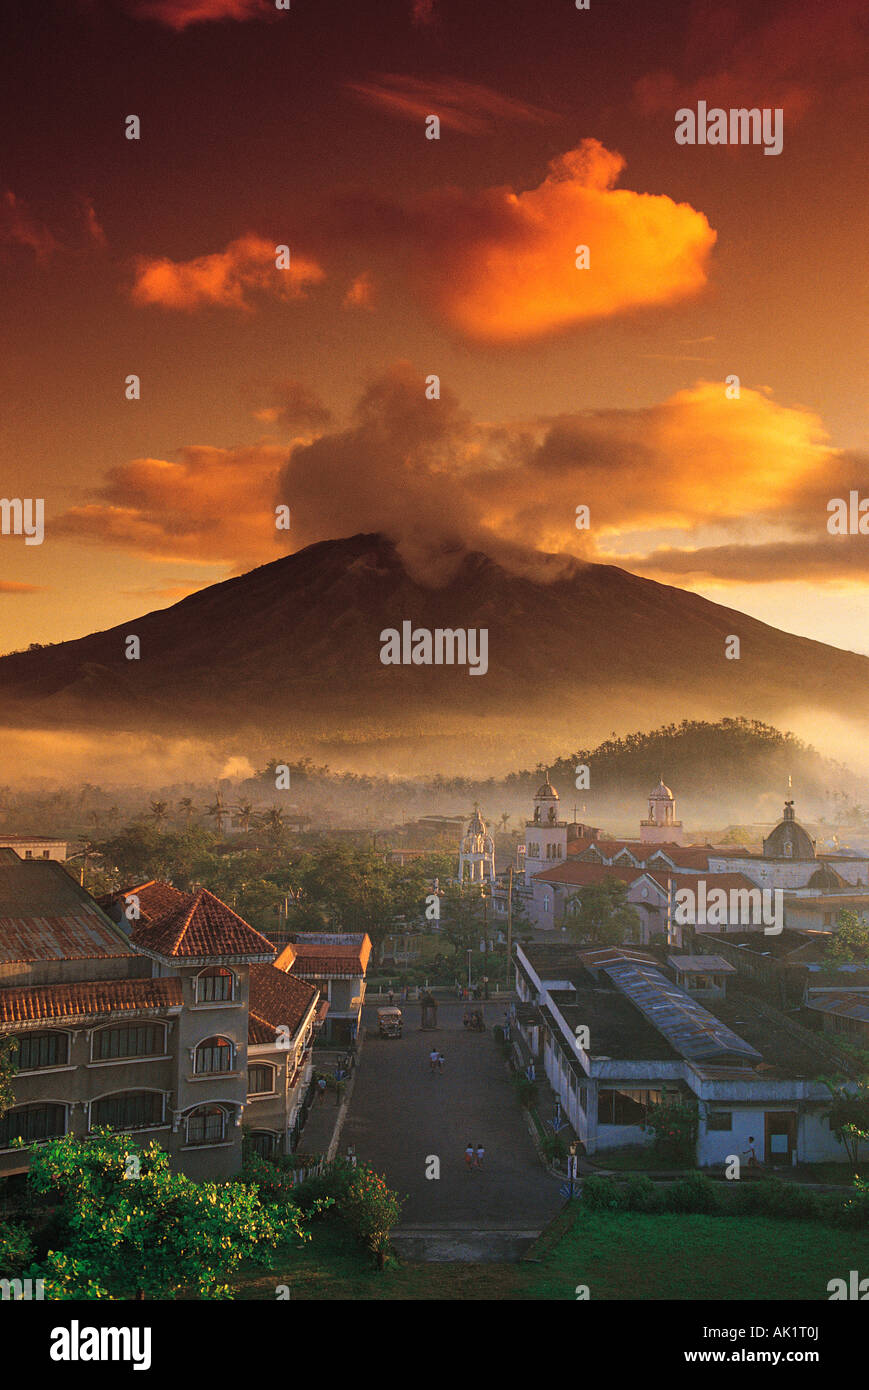 Philippines. Luzon Island. Sunrise over volcano and city. Stock Photo